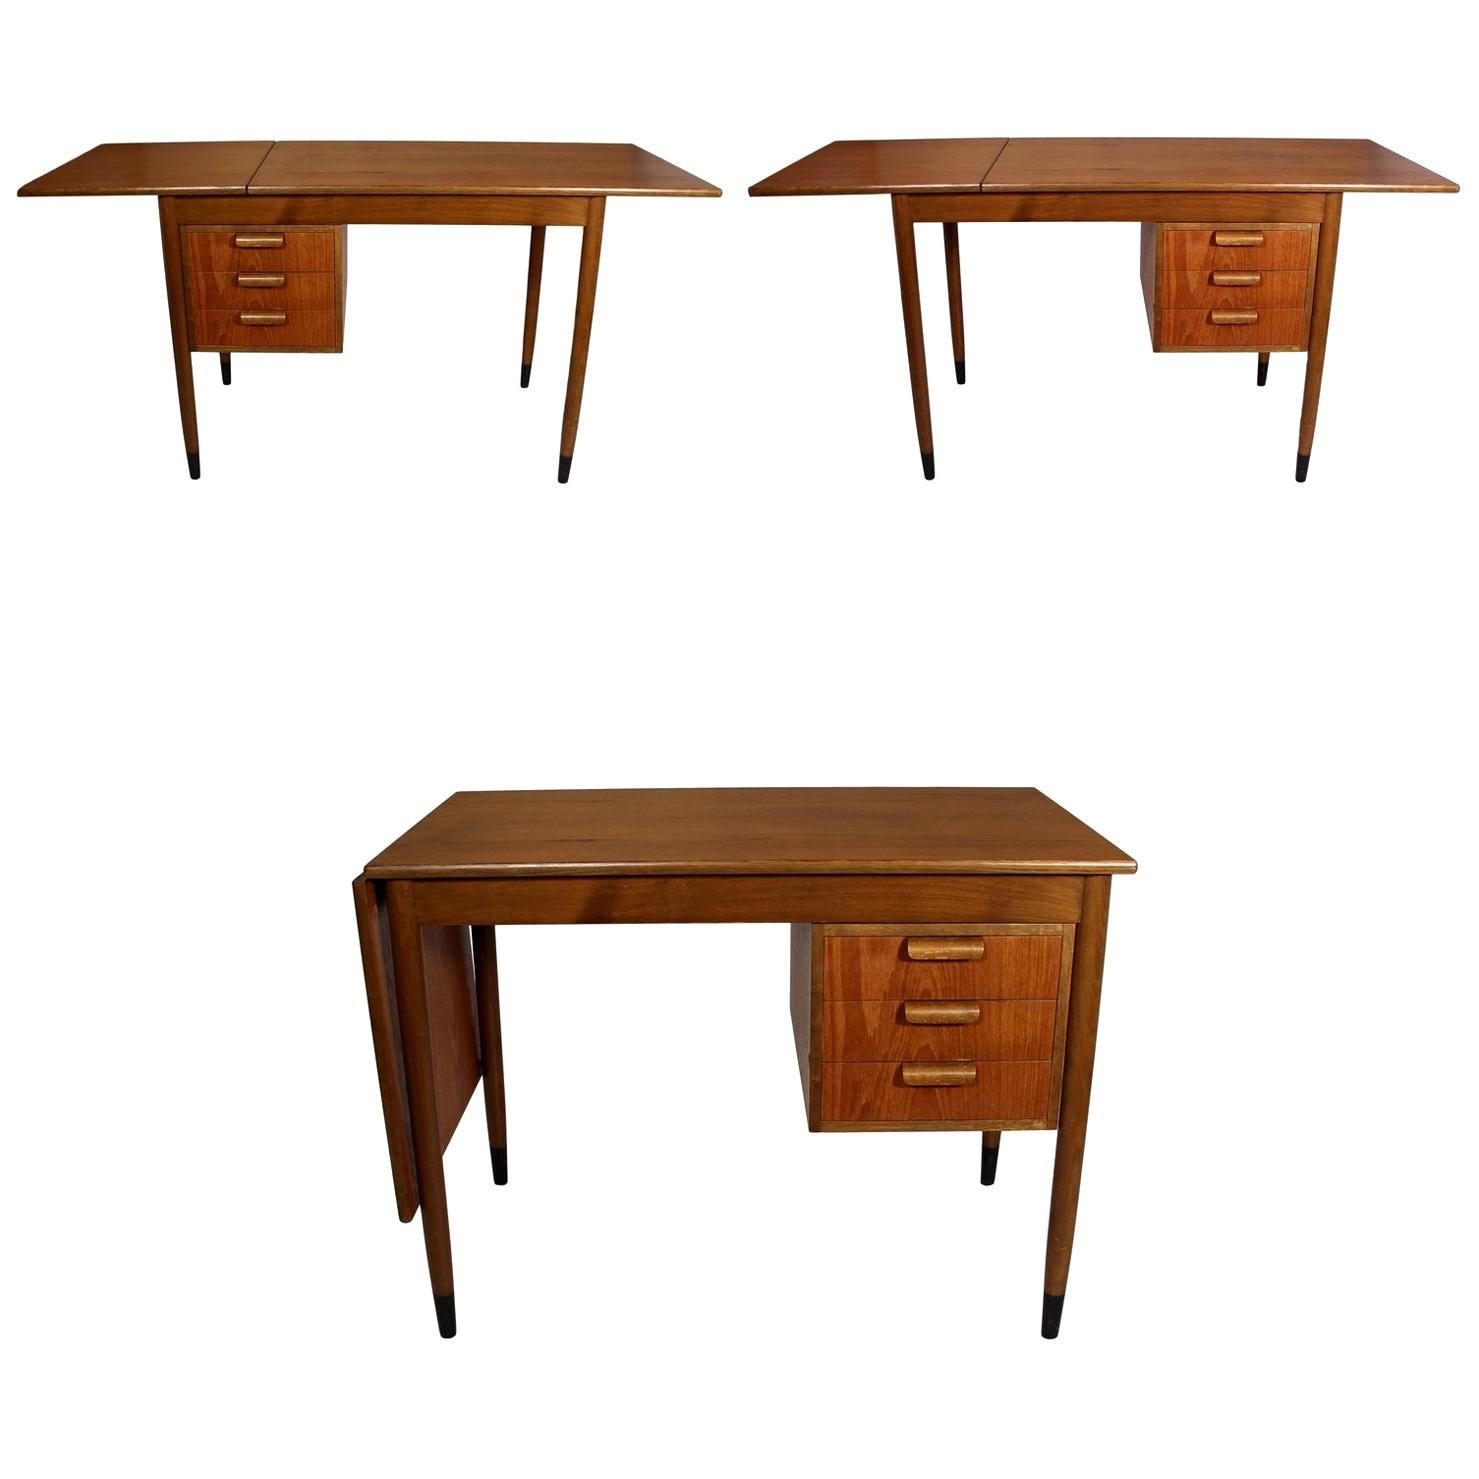 Fold Down Sliding Top And Drawer Danish Teak Desk For Sale At 1stdibs